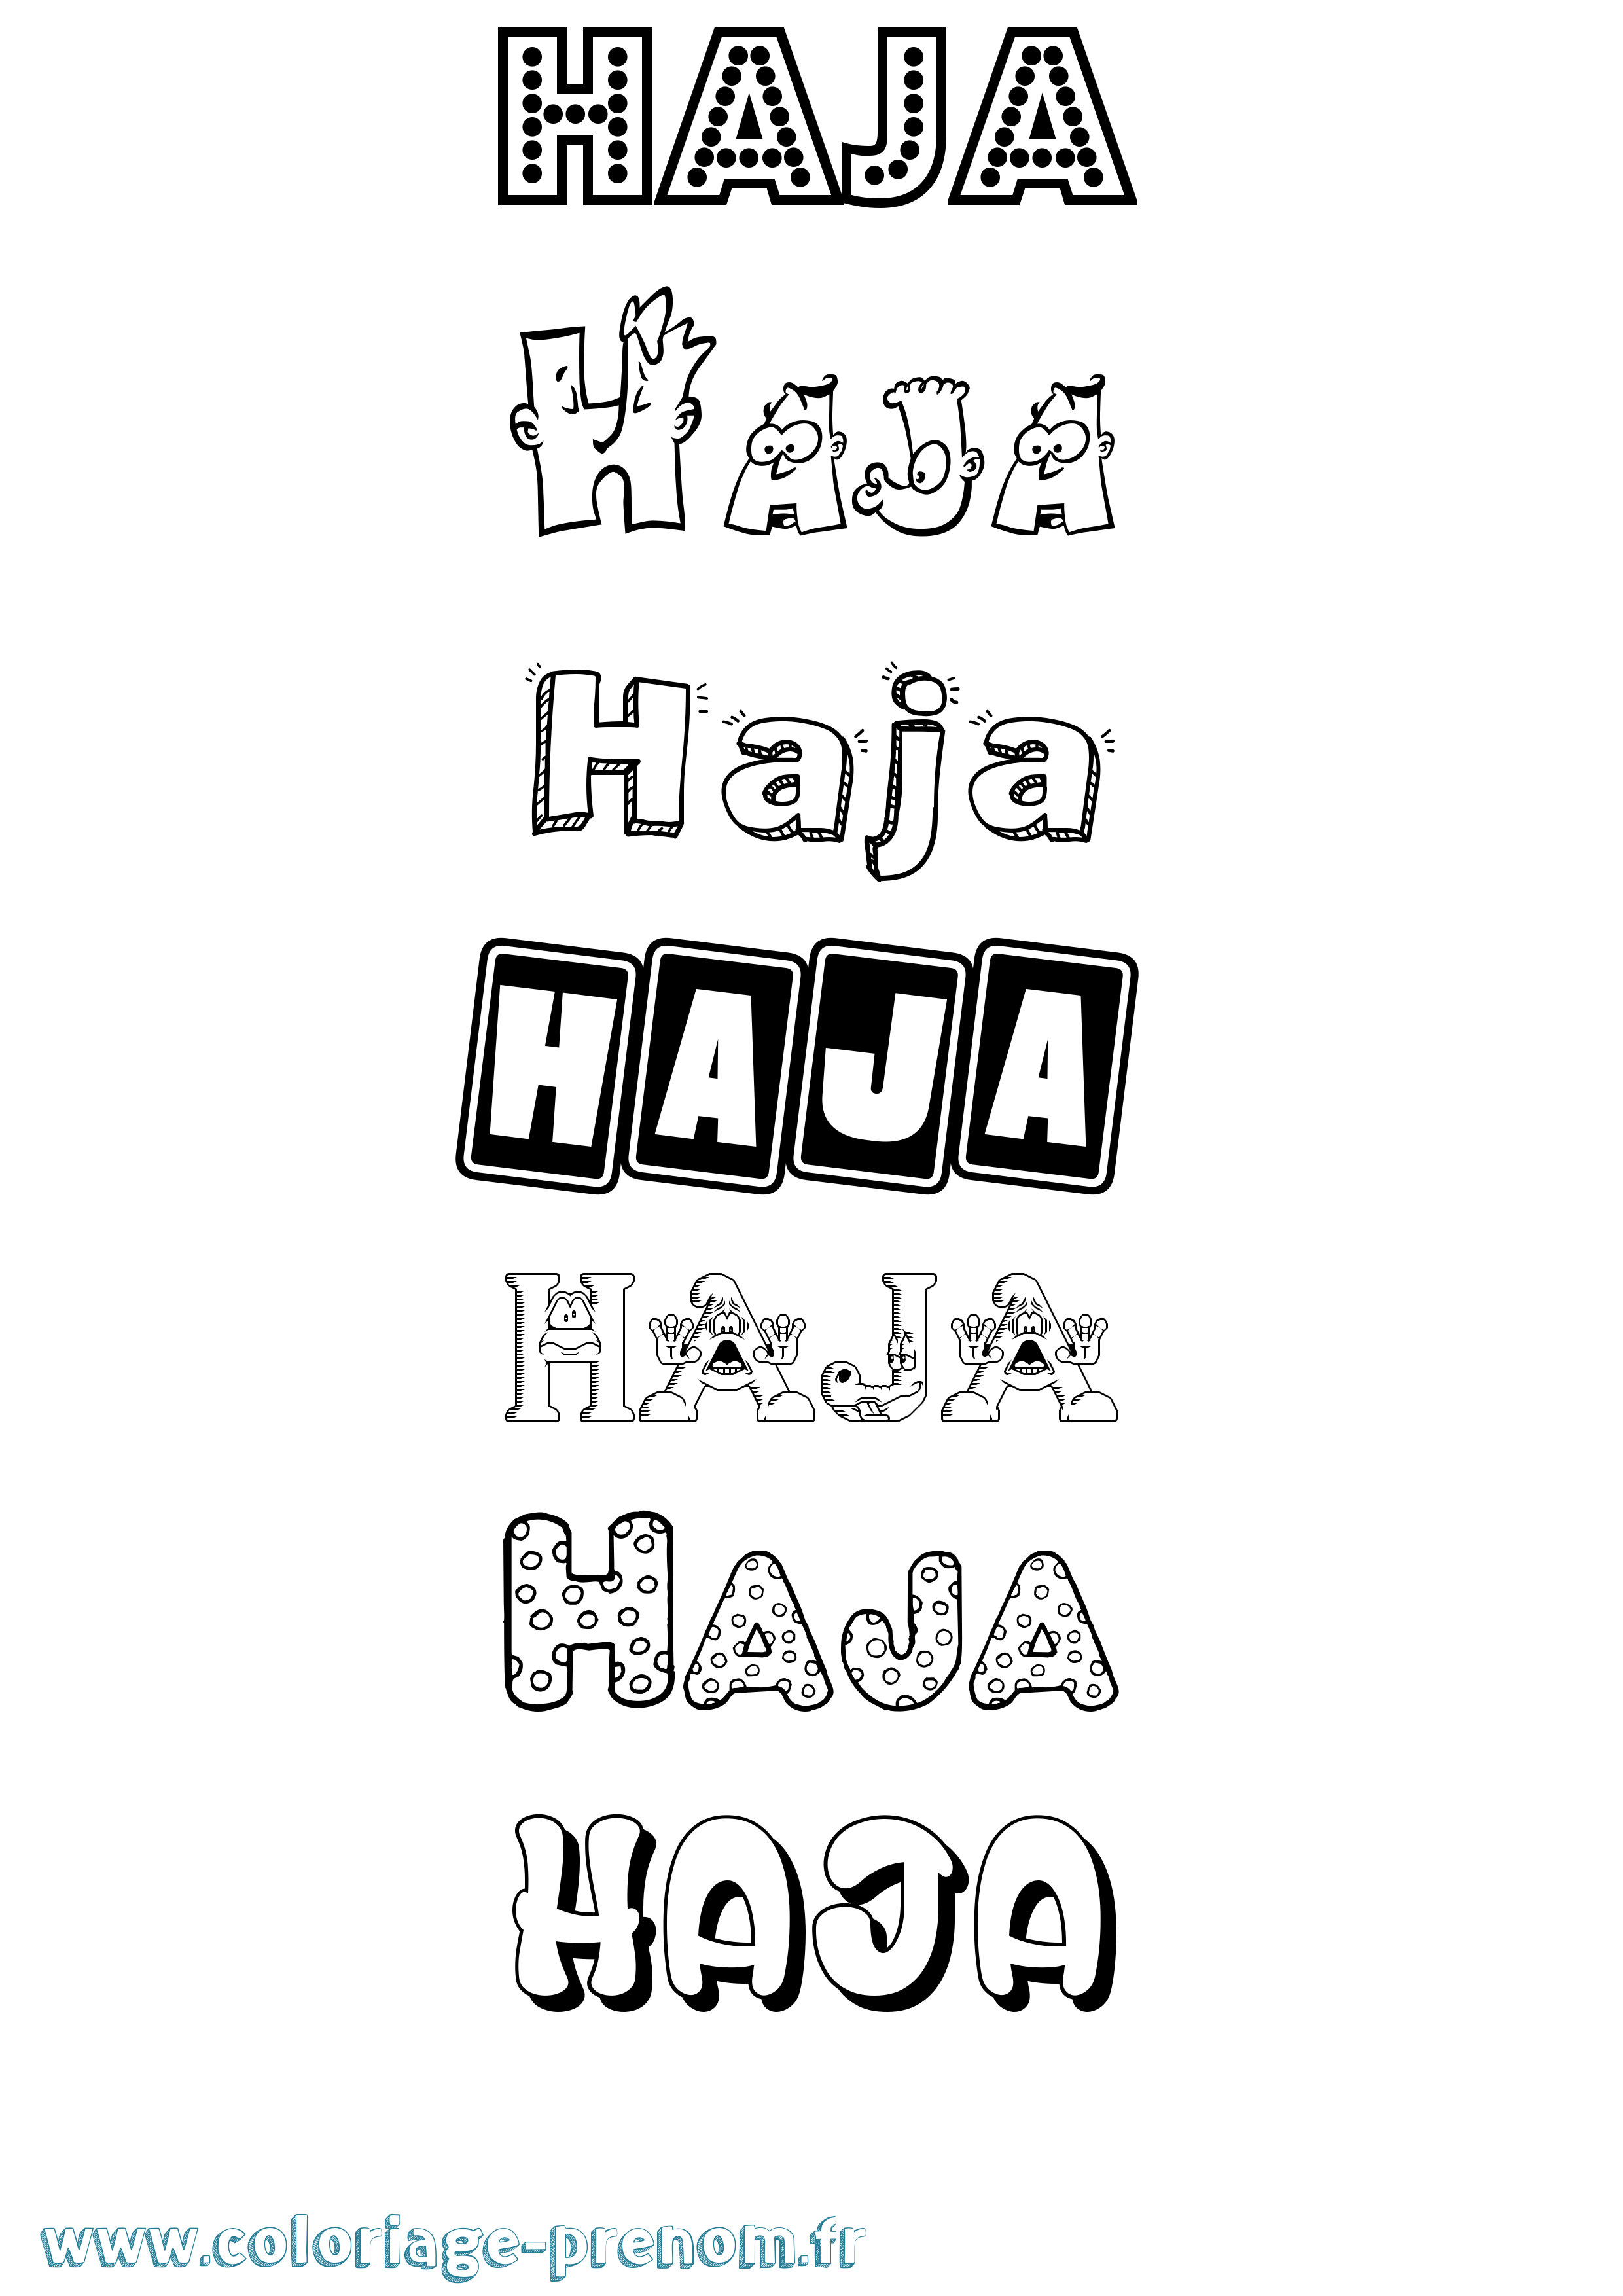 Coloriage prénom Haja Fun